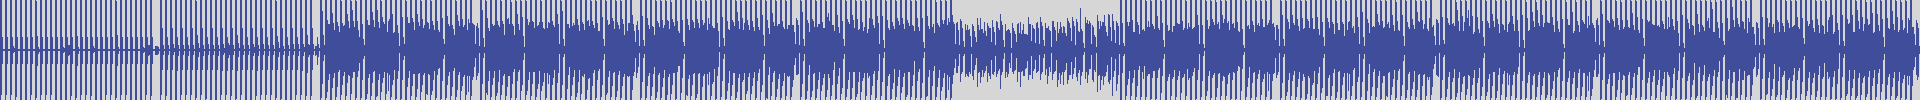 nf_boyz_records [NFY069] Sin Kope - Flowers [Big Tech Mix] audio wave form